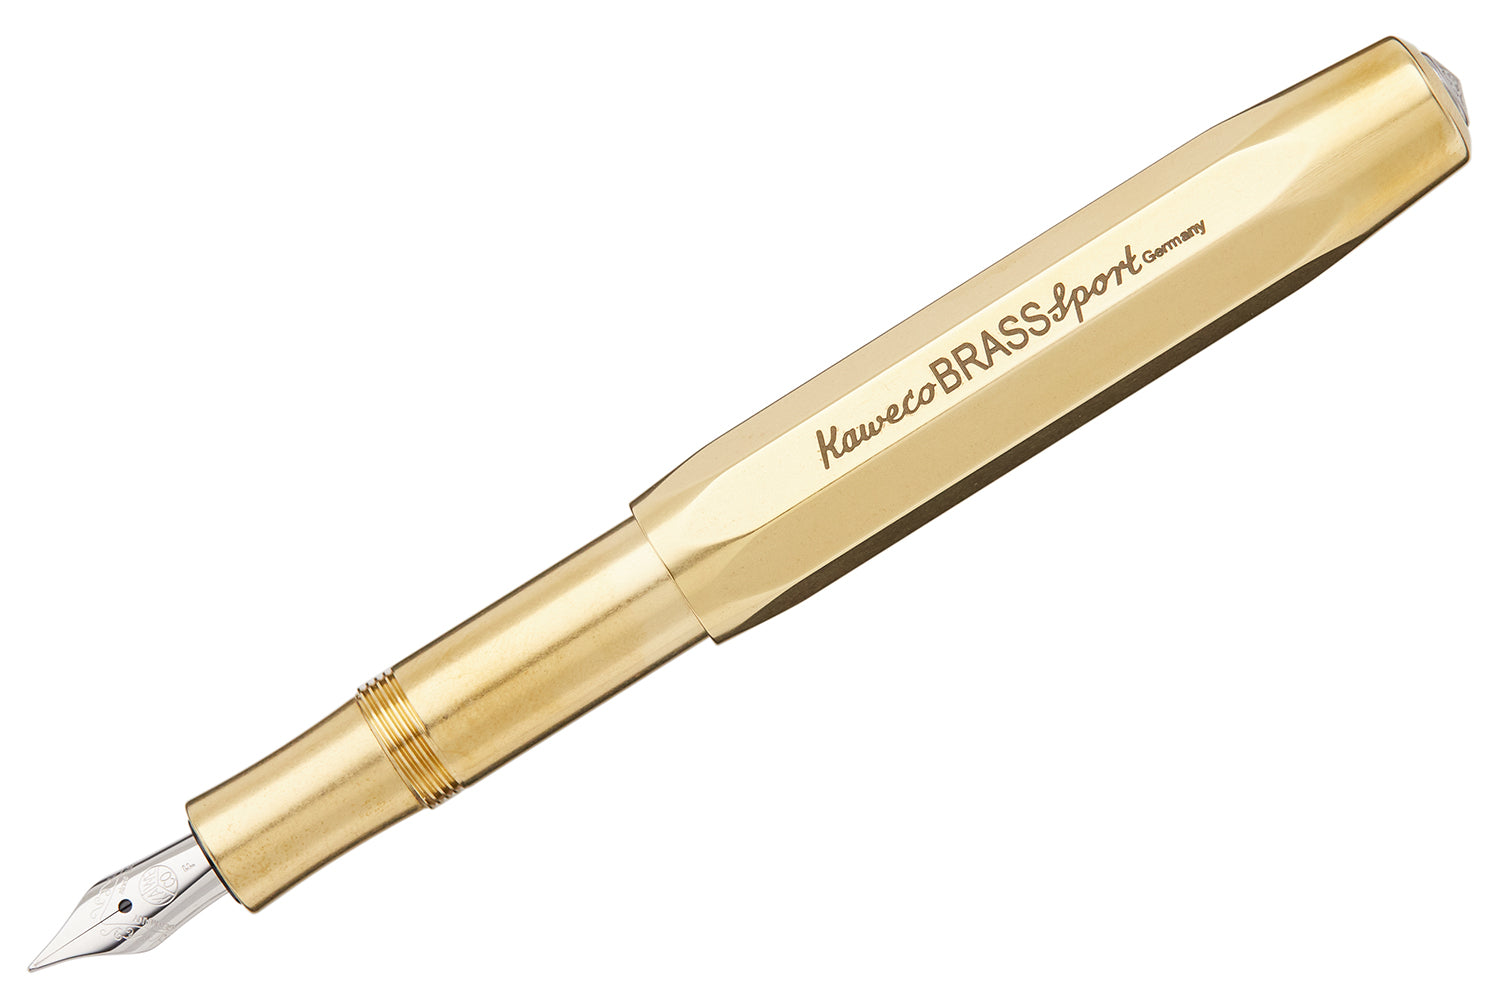 Kaweco Brass Sport - Pen Boutique Ltd